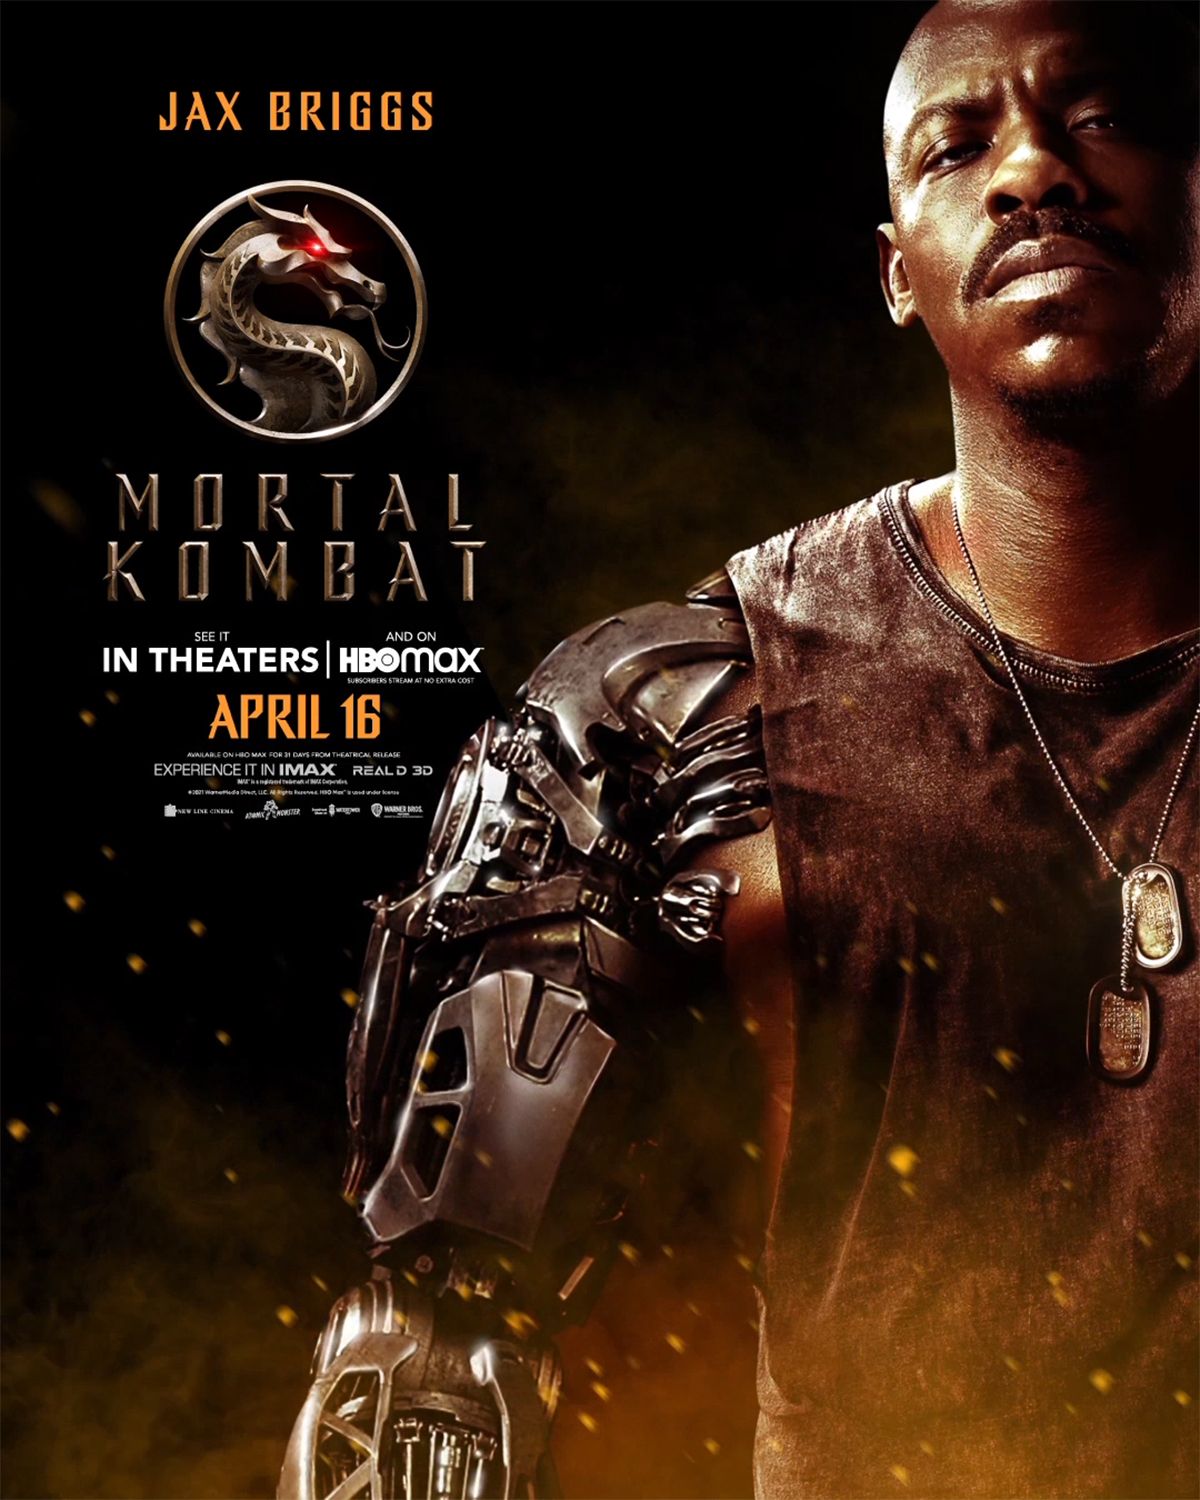 Jax character poster for Mortal Kombat movie